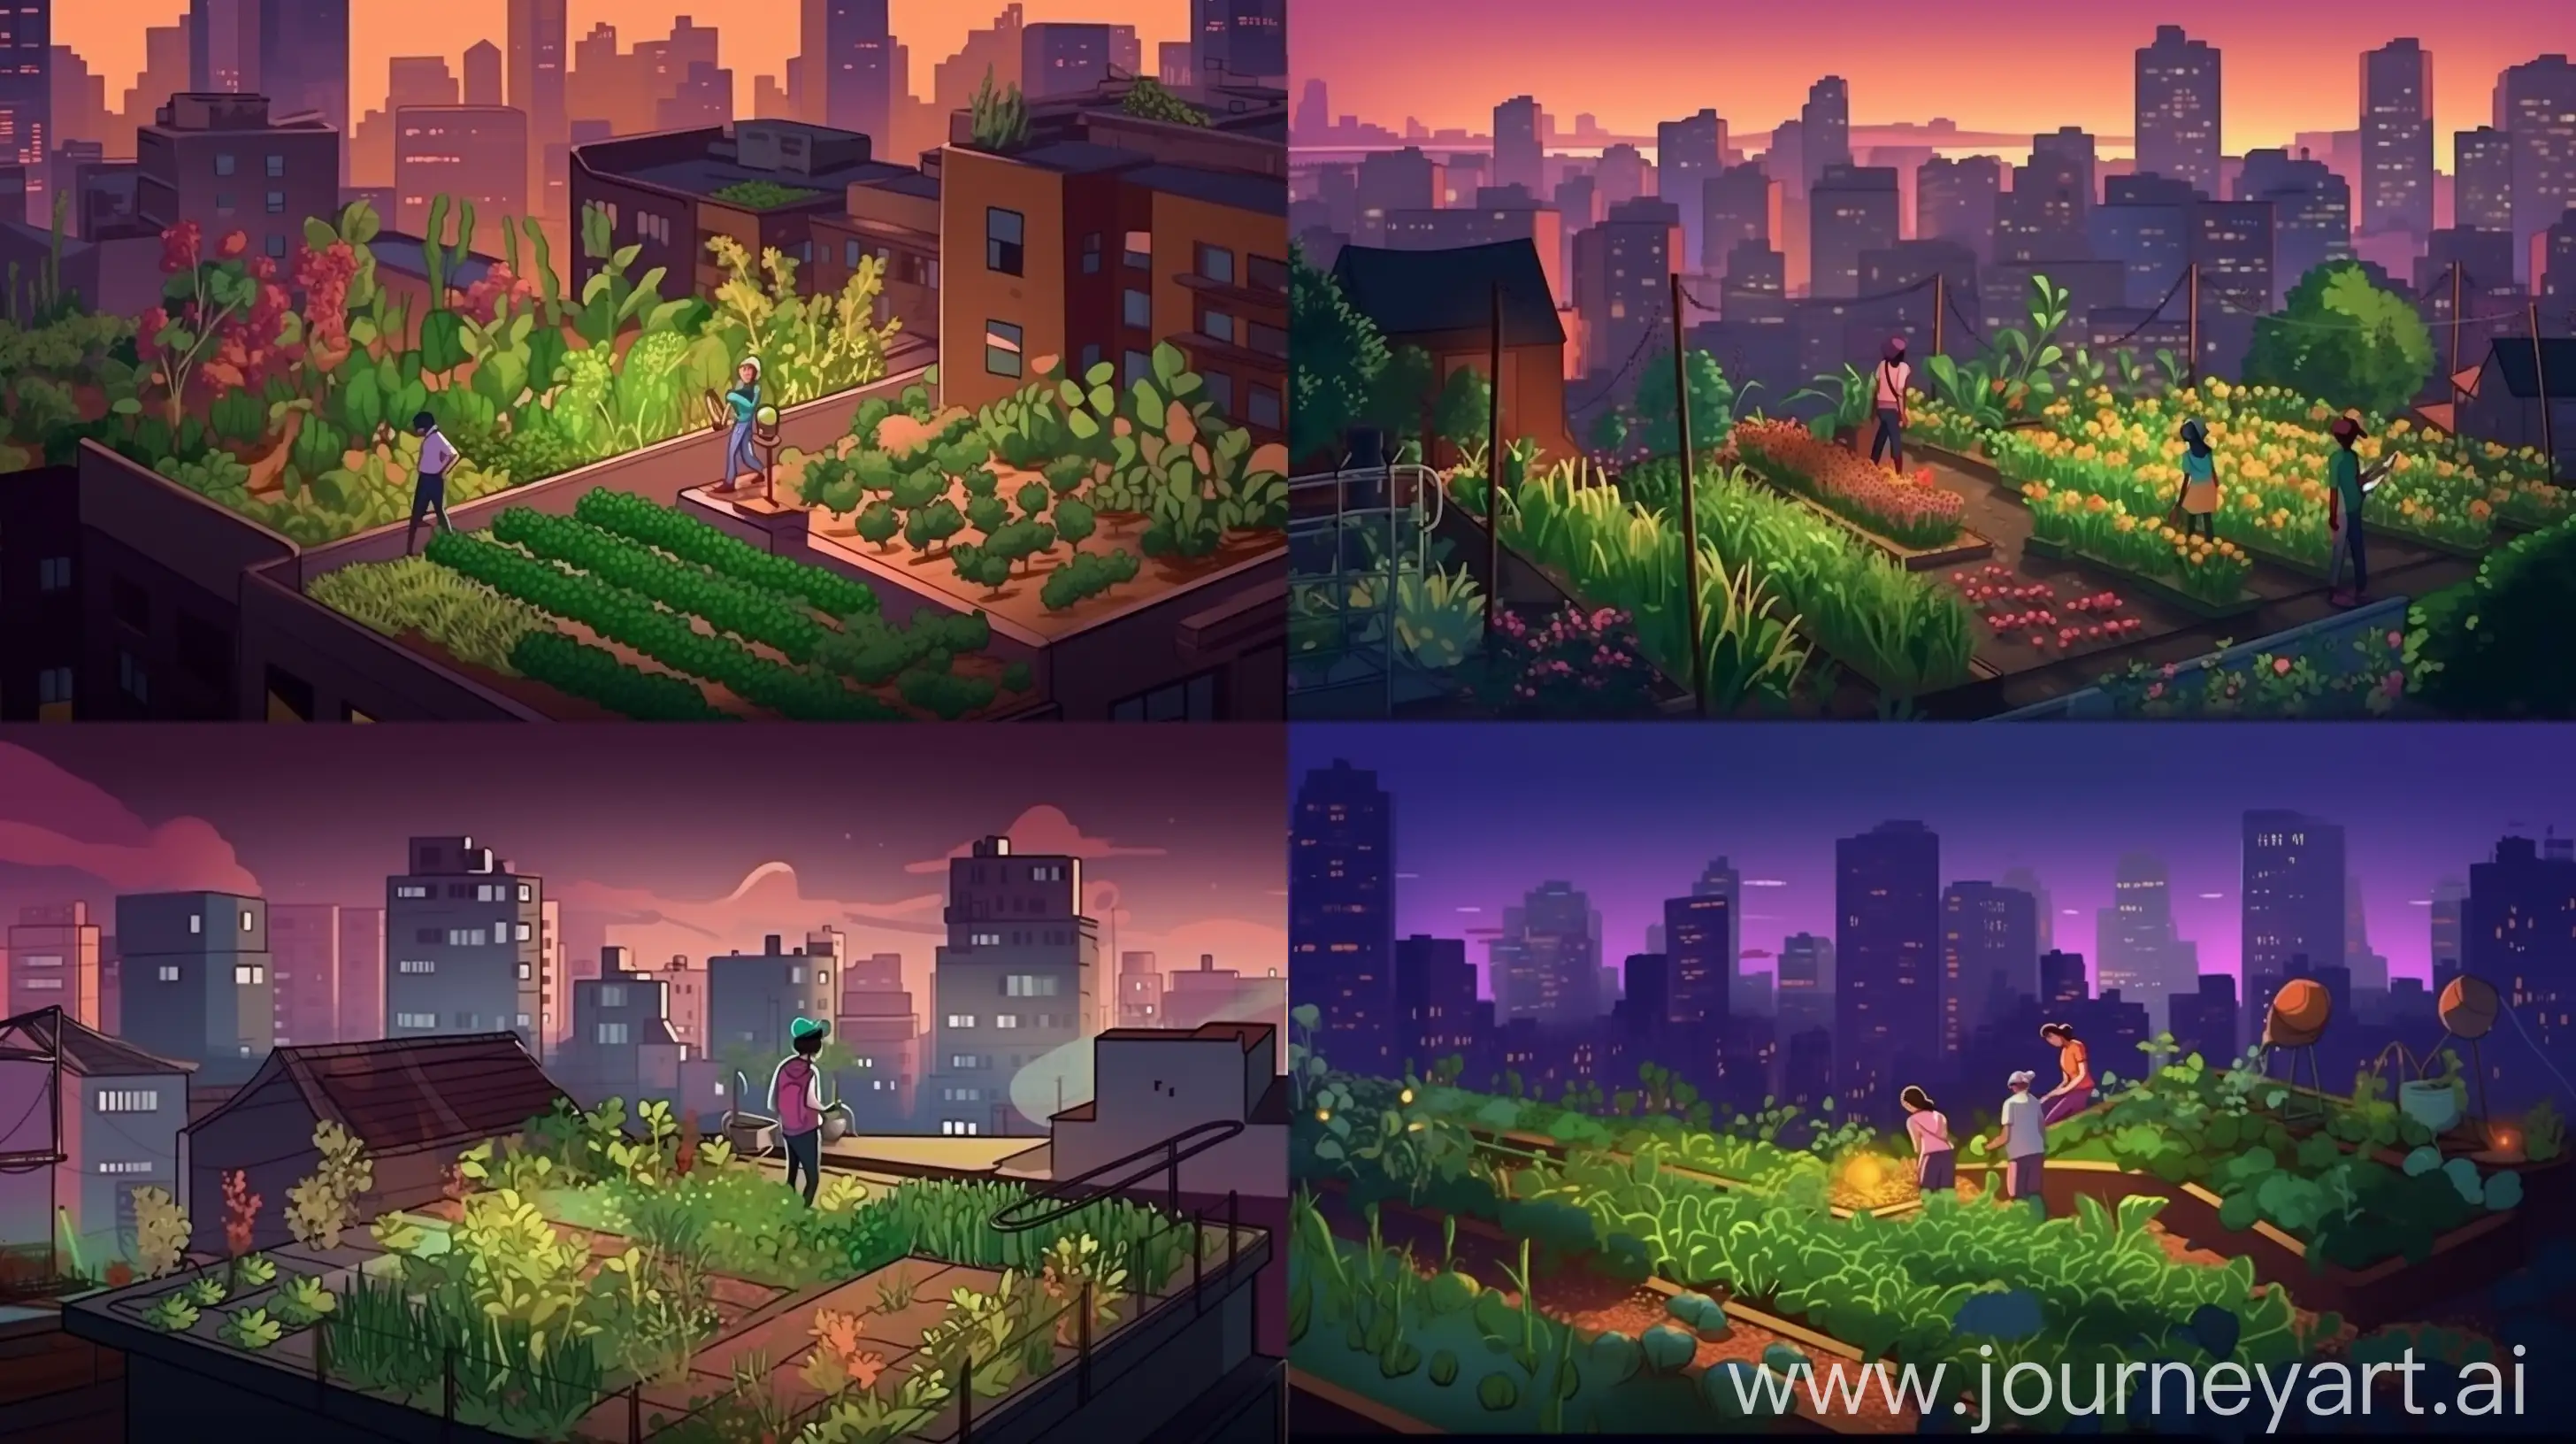 Urban-Rooftop-Garden-Harvesting-Amid-City-Lights